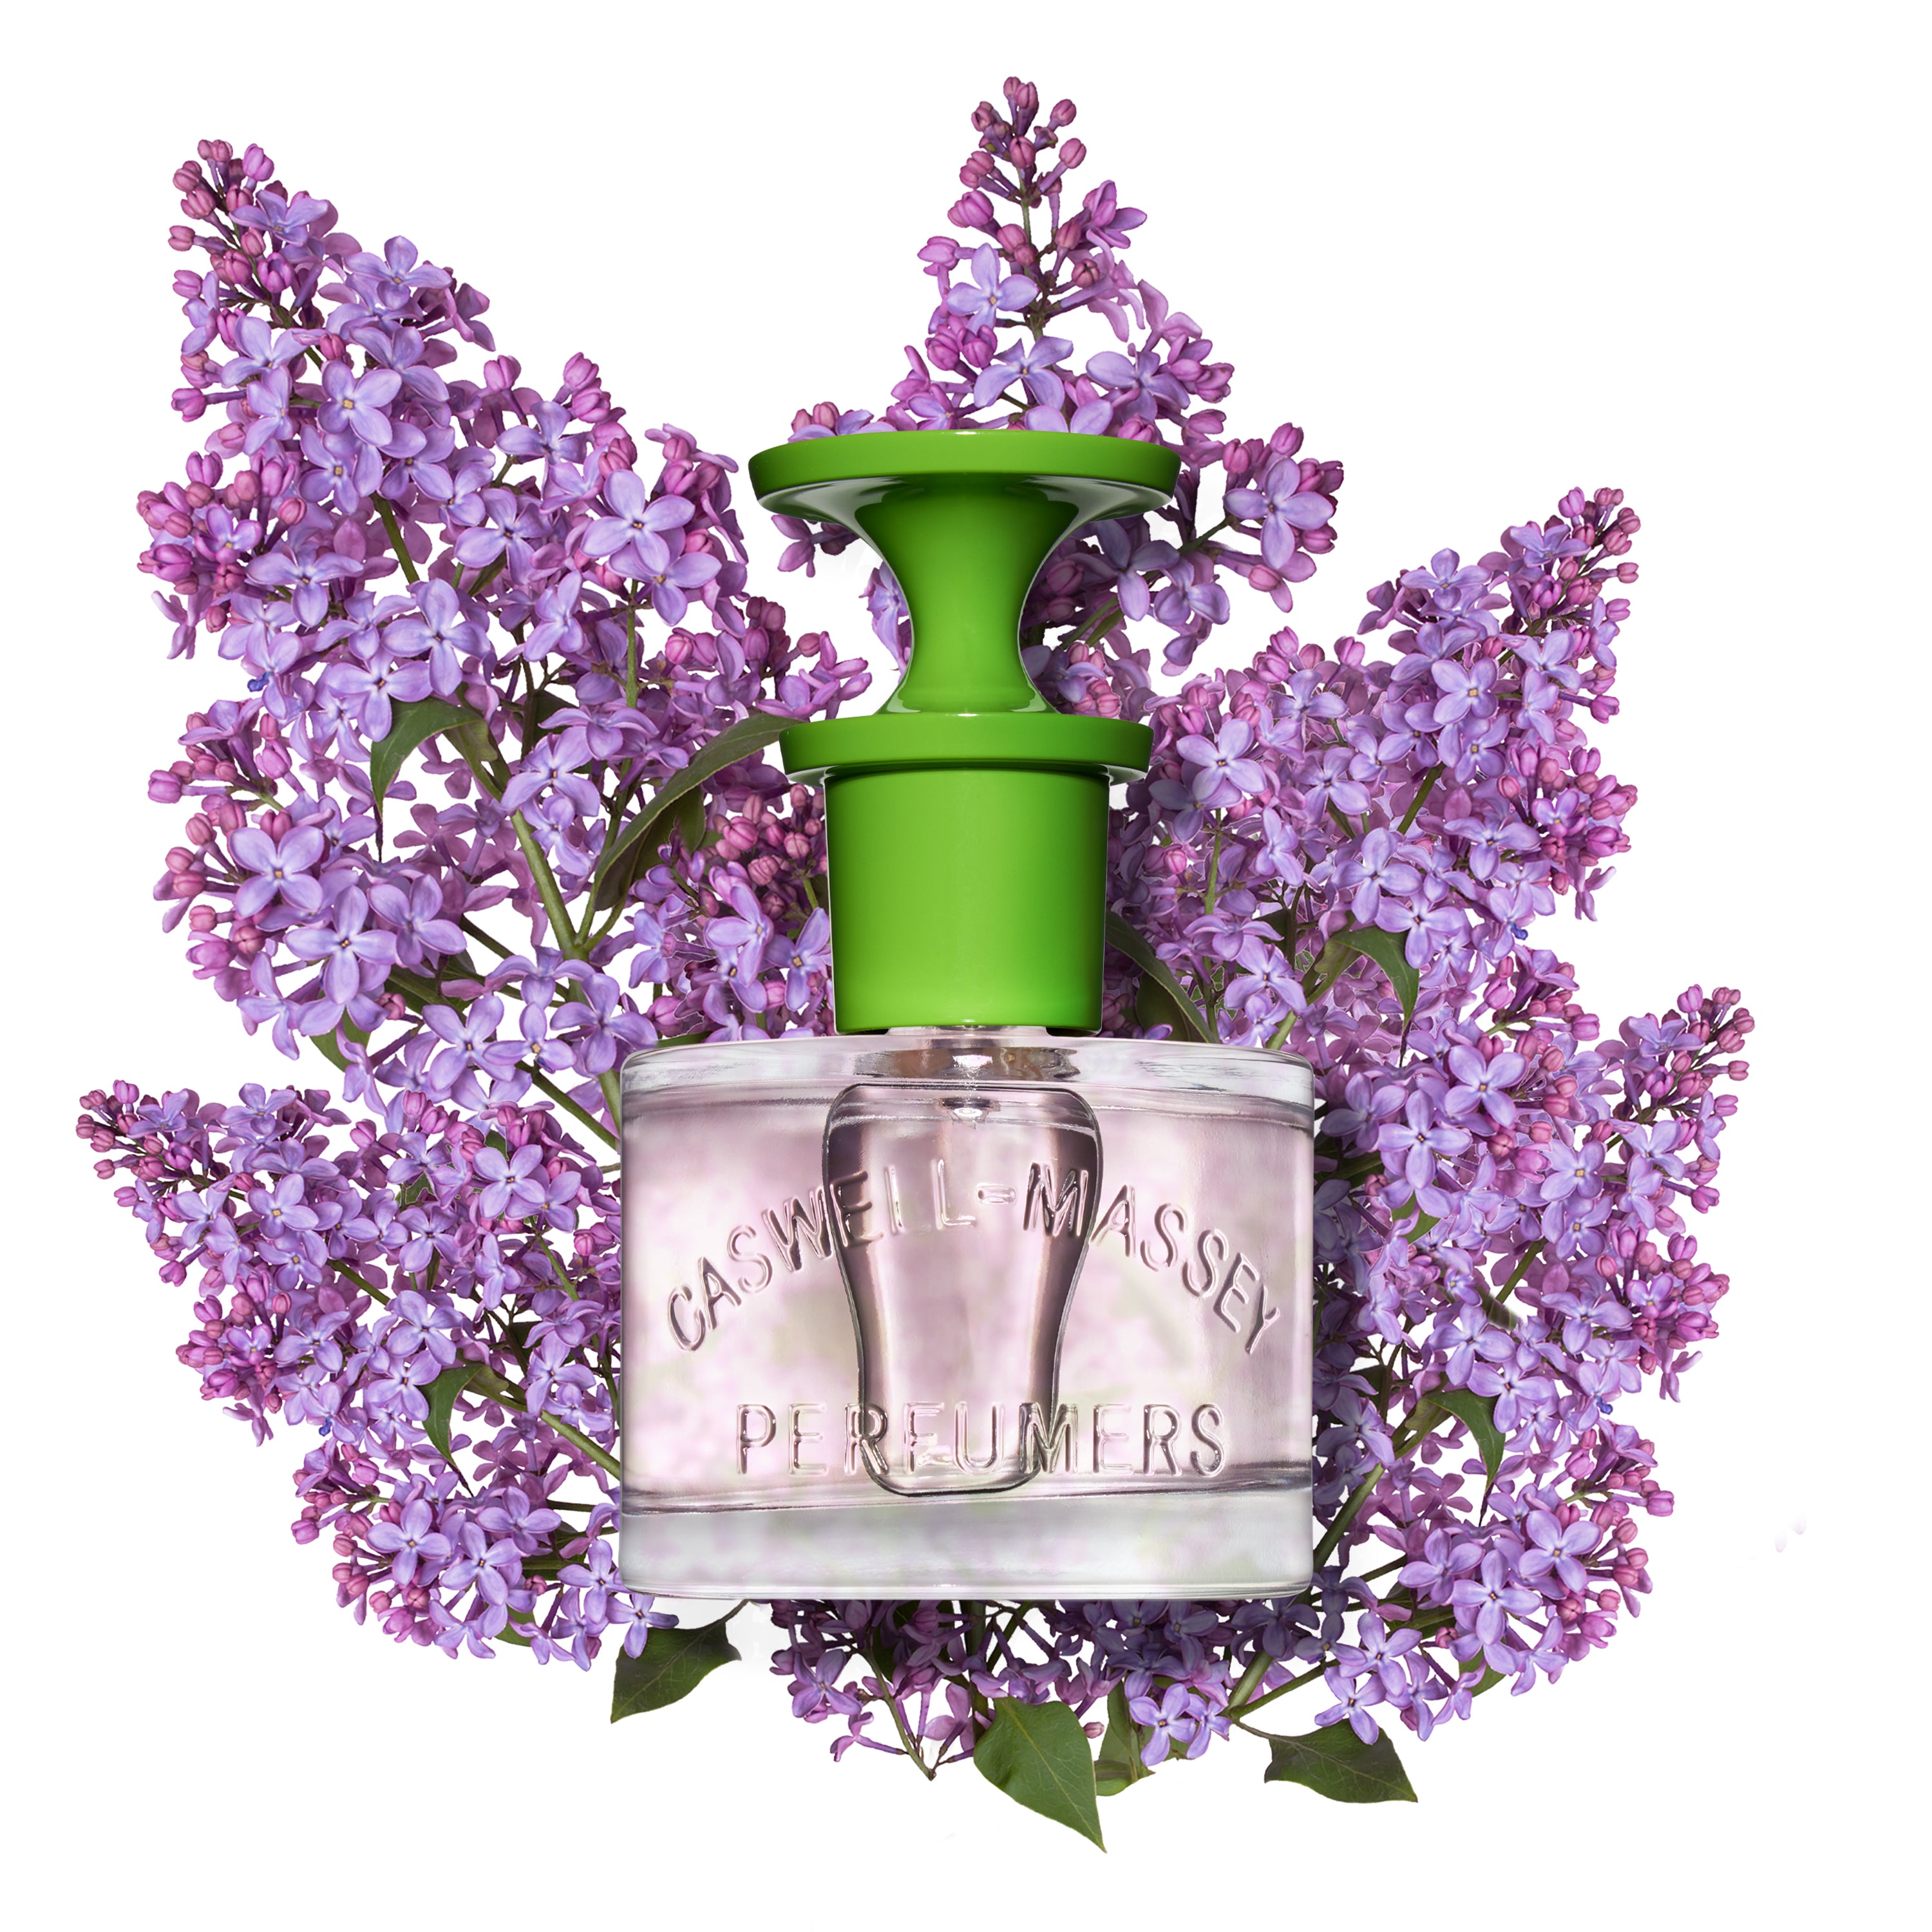 Caswell-Massey Lilac Eau de Toilette, Delicate & Elegant Floral Fragrance  Inspired by New York Botanical Garden, Sample Size Vial, 0.25 Fl Oz